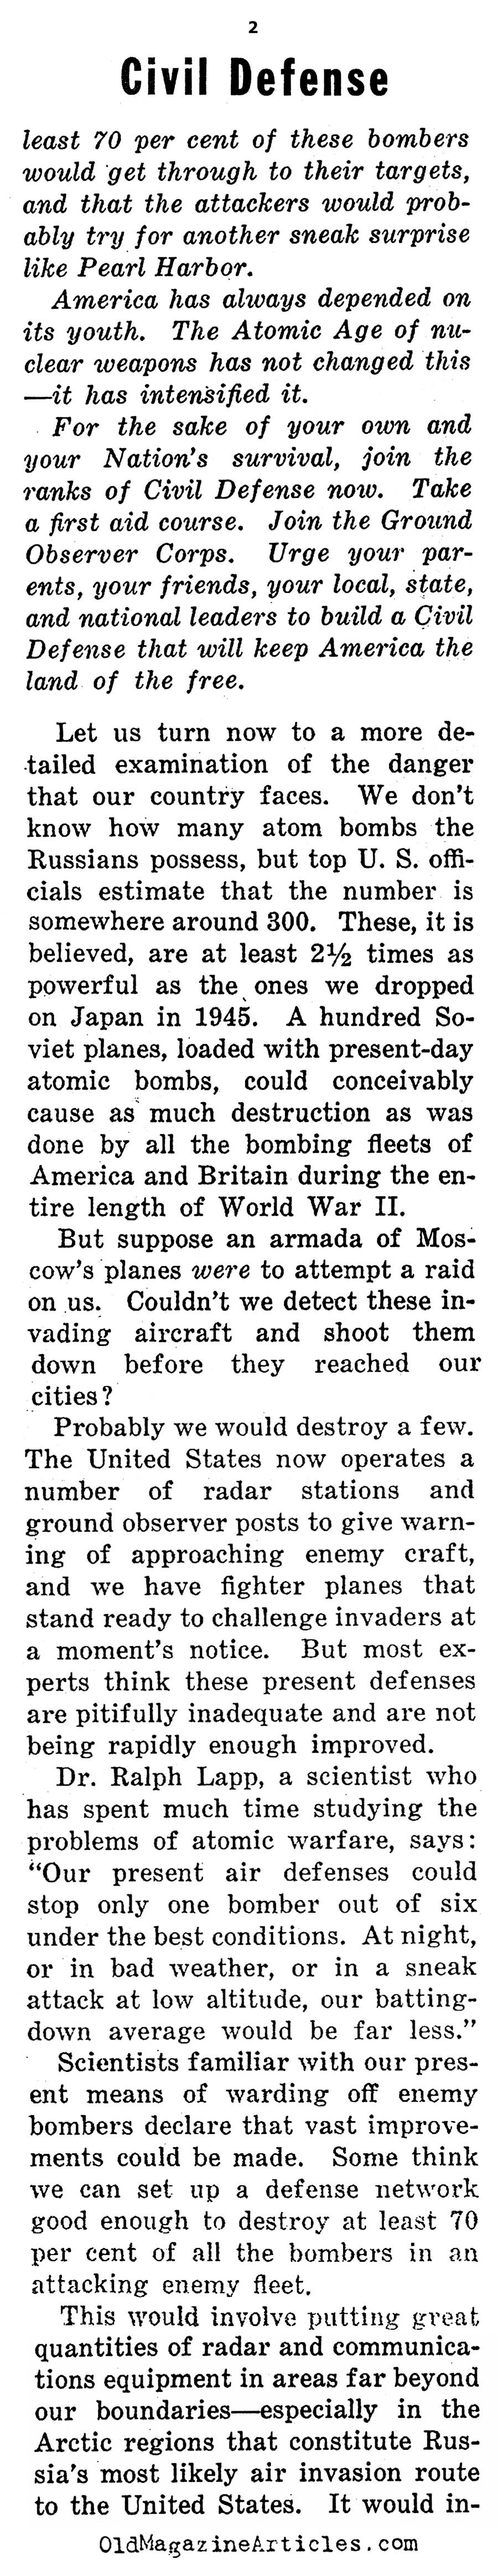 American Civil Defense (Weekly News Review, 1953)